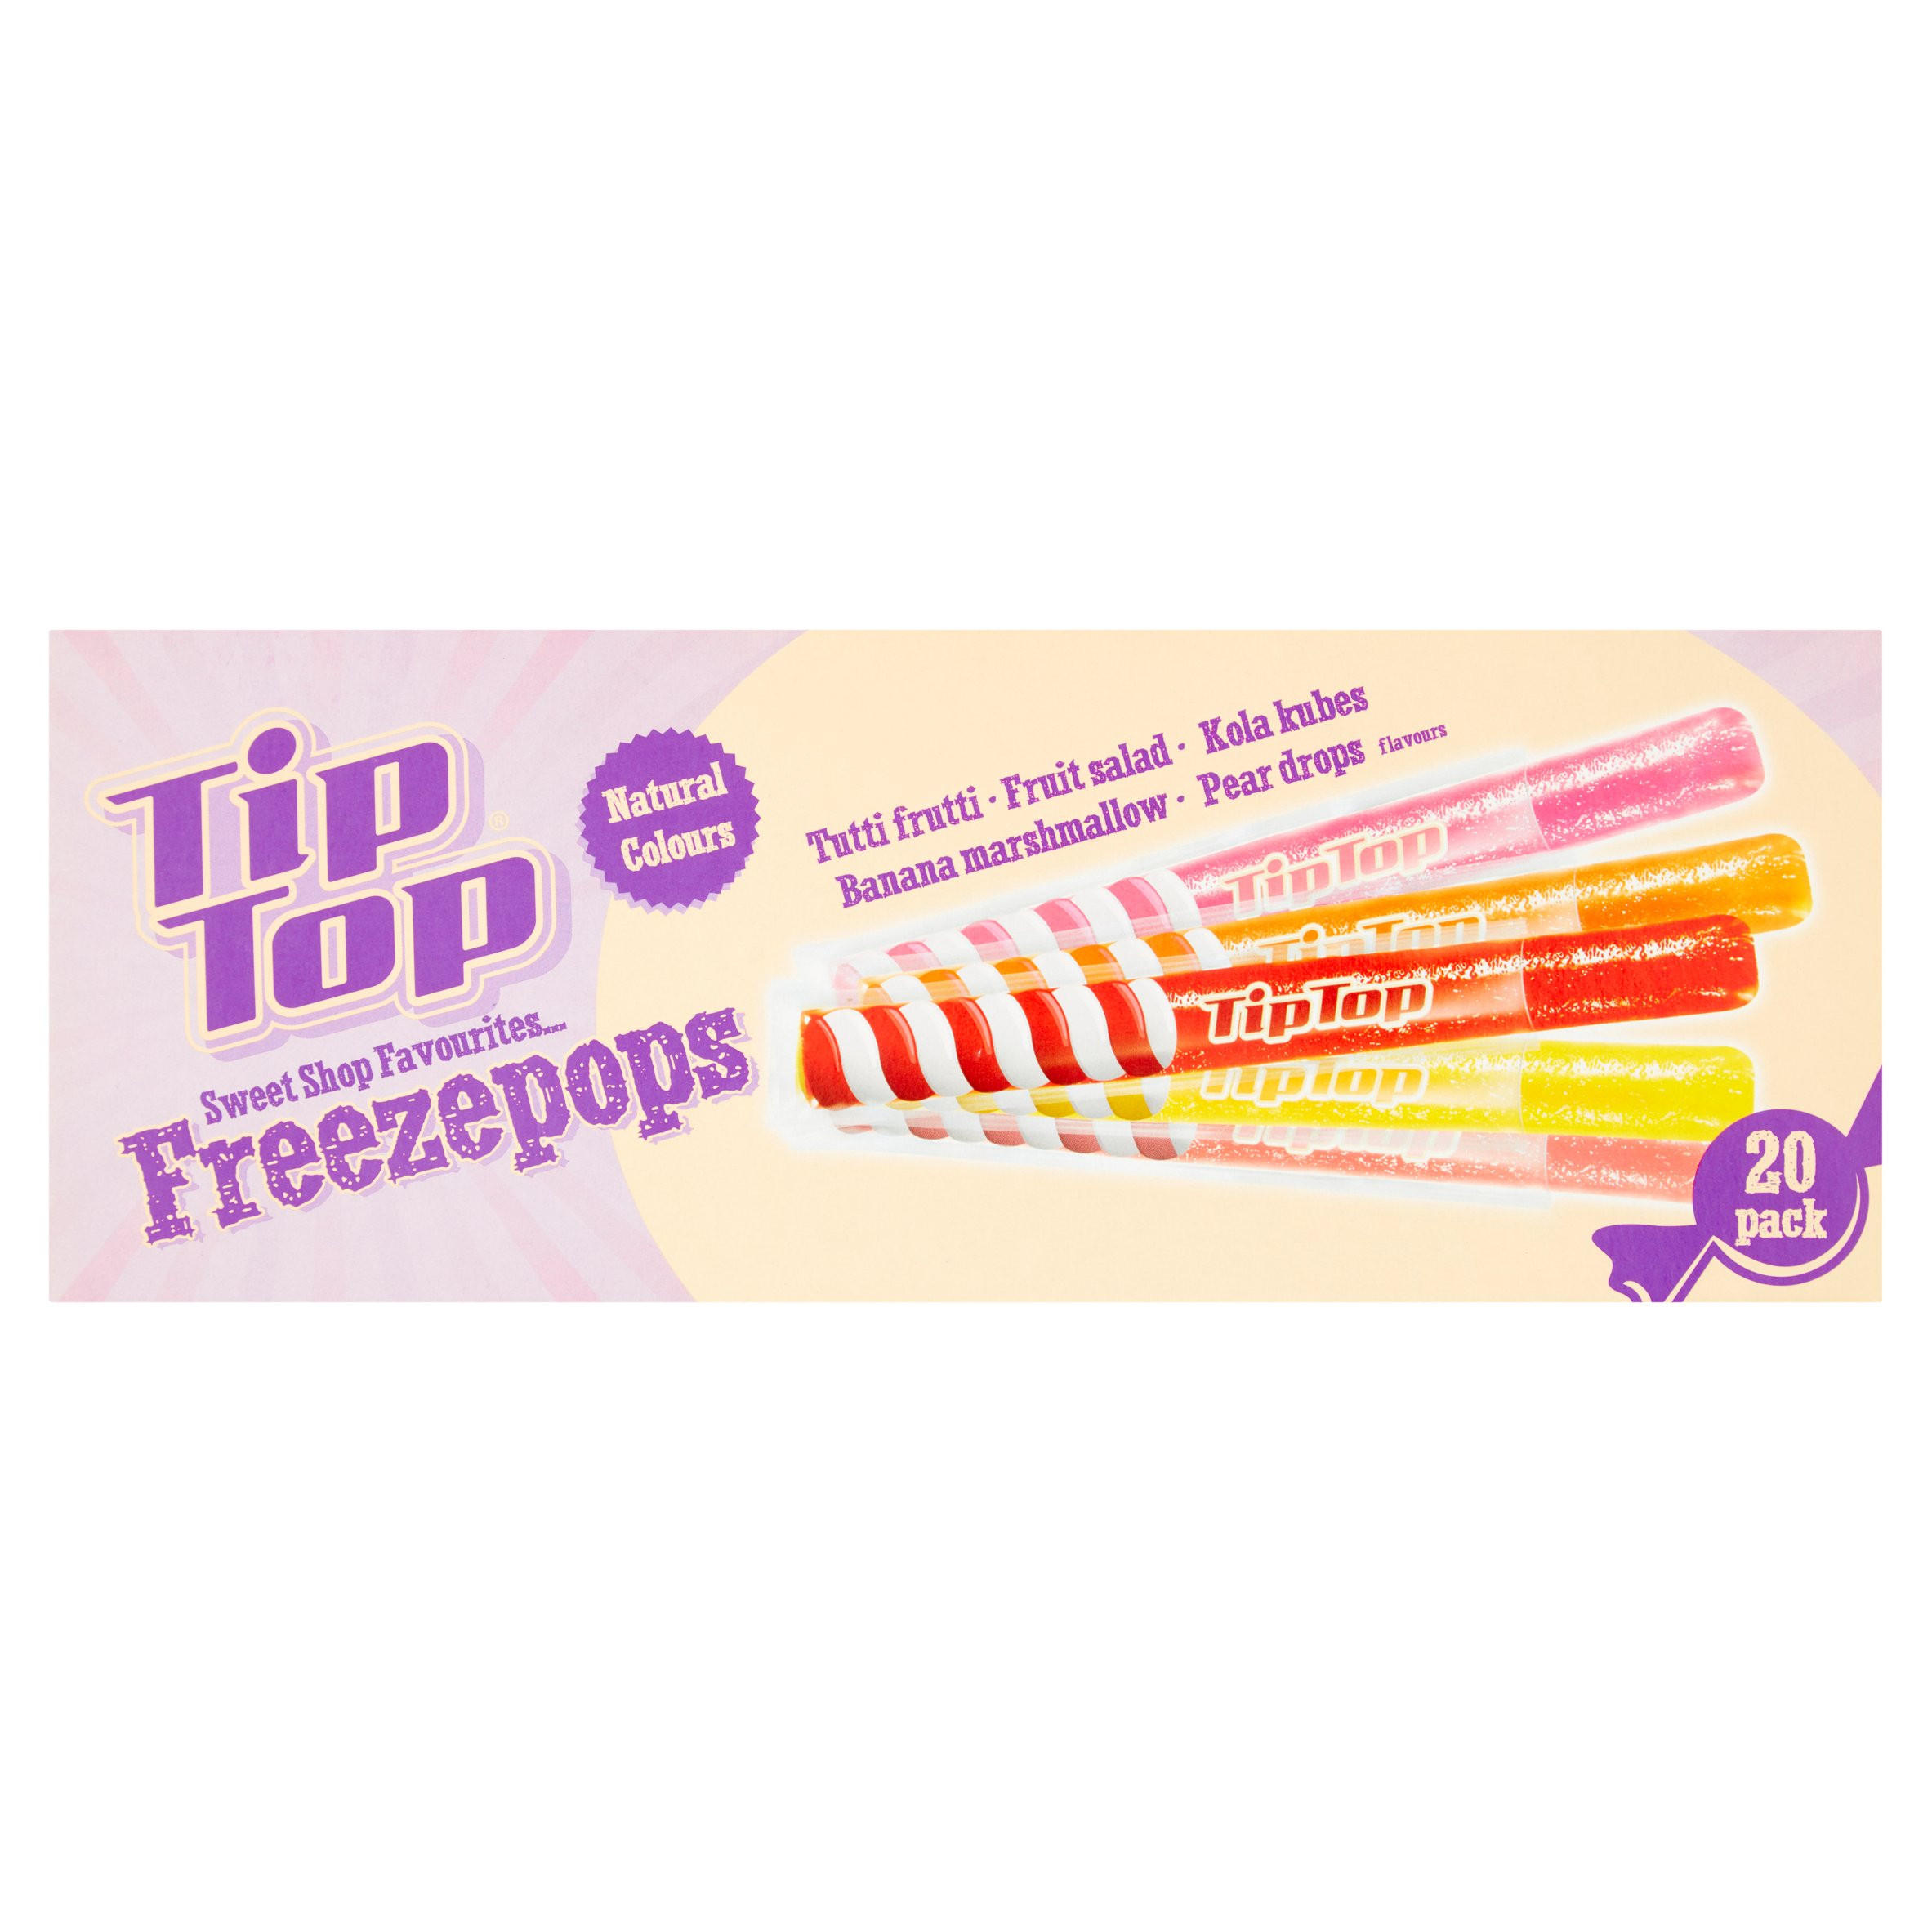 Tip Top Shop Favourites Freezepops 20 x 45ml (900ml) | Ice Cream Cones, Sticks & Bars | Iceland Foods